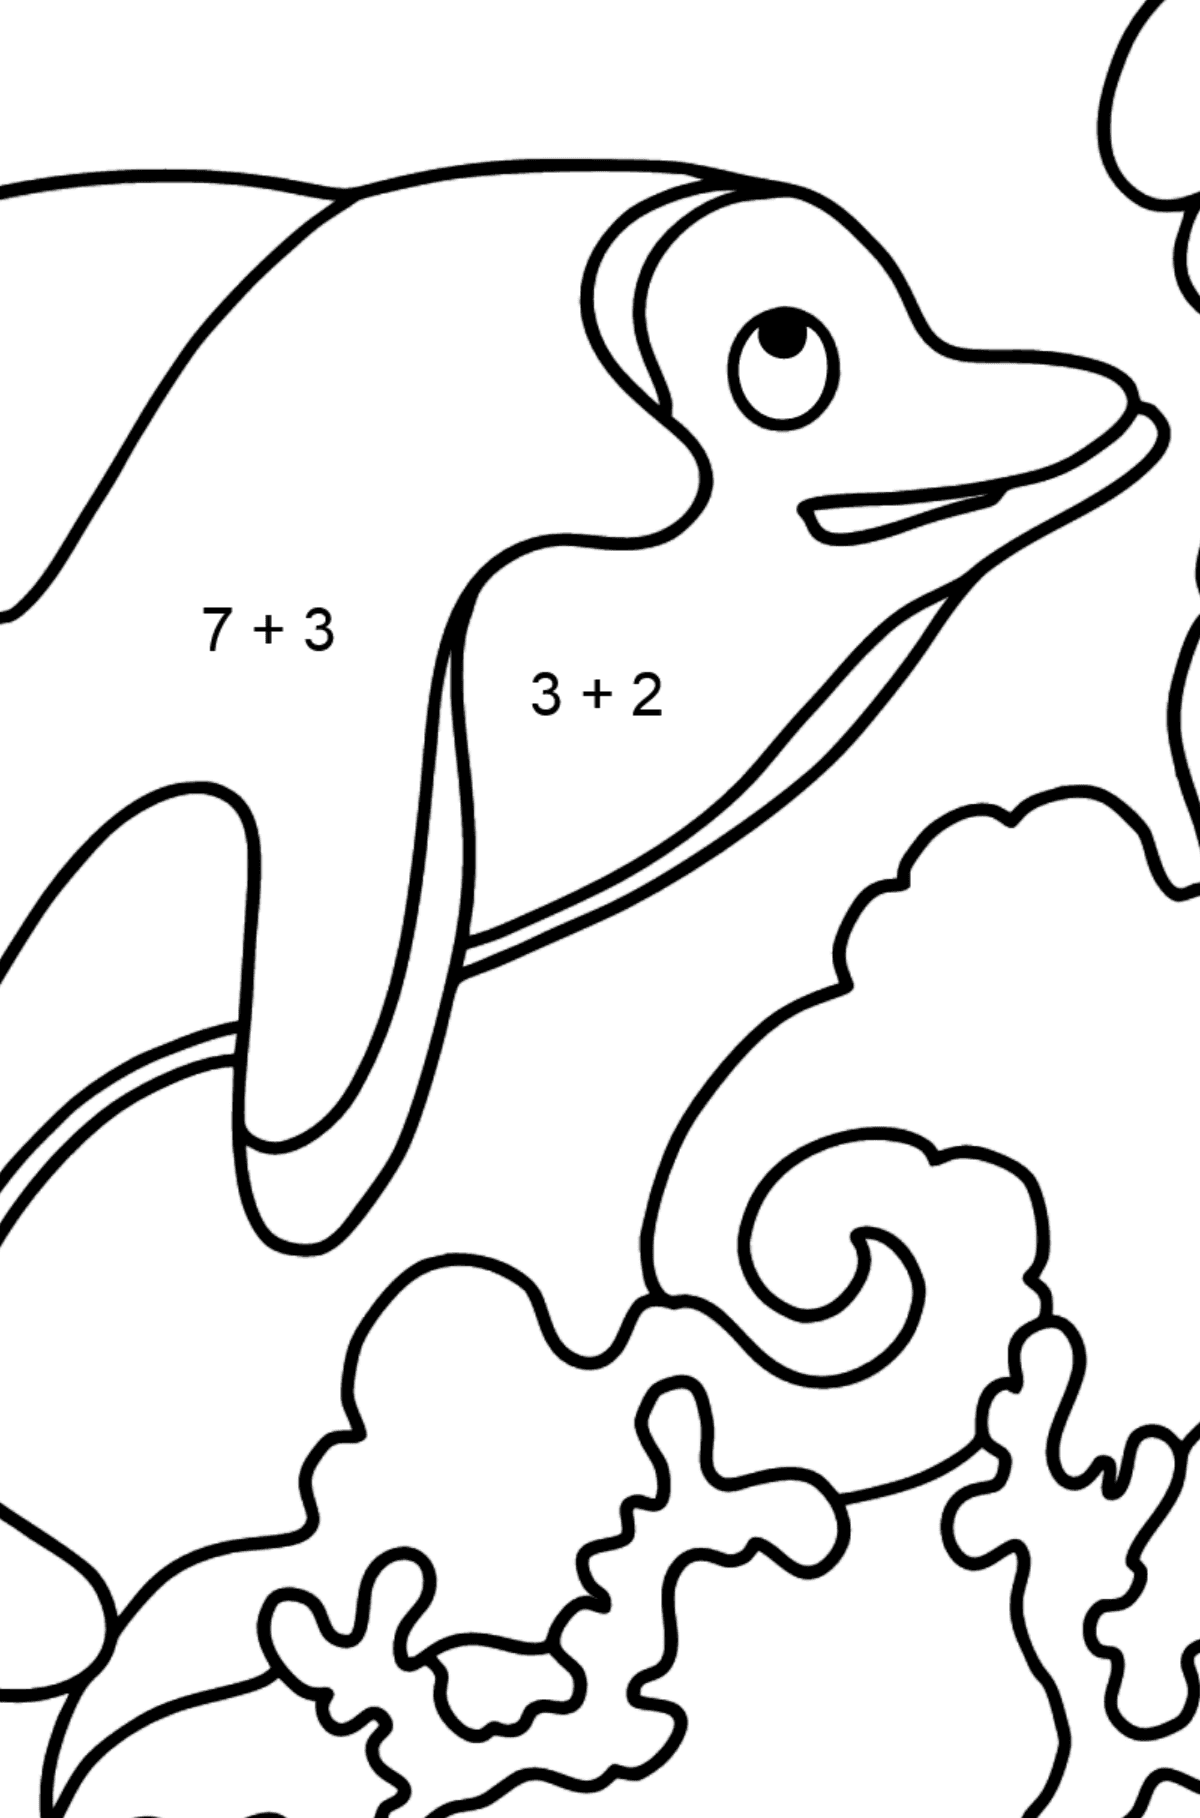 Розмальовка Дельфін для дітей - Математична Розмальовка Додавання для дітей